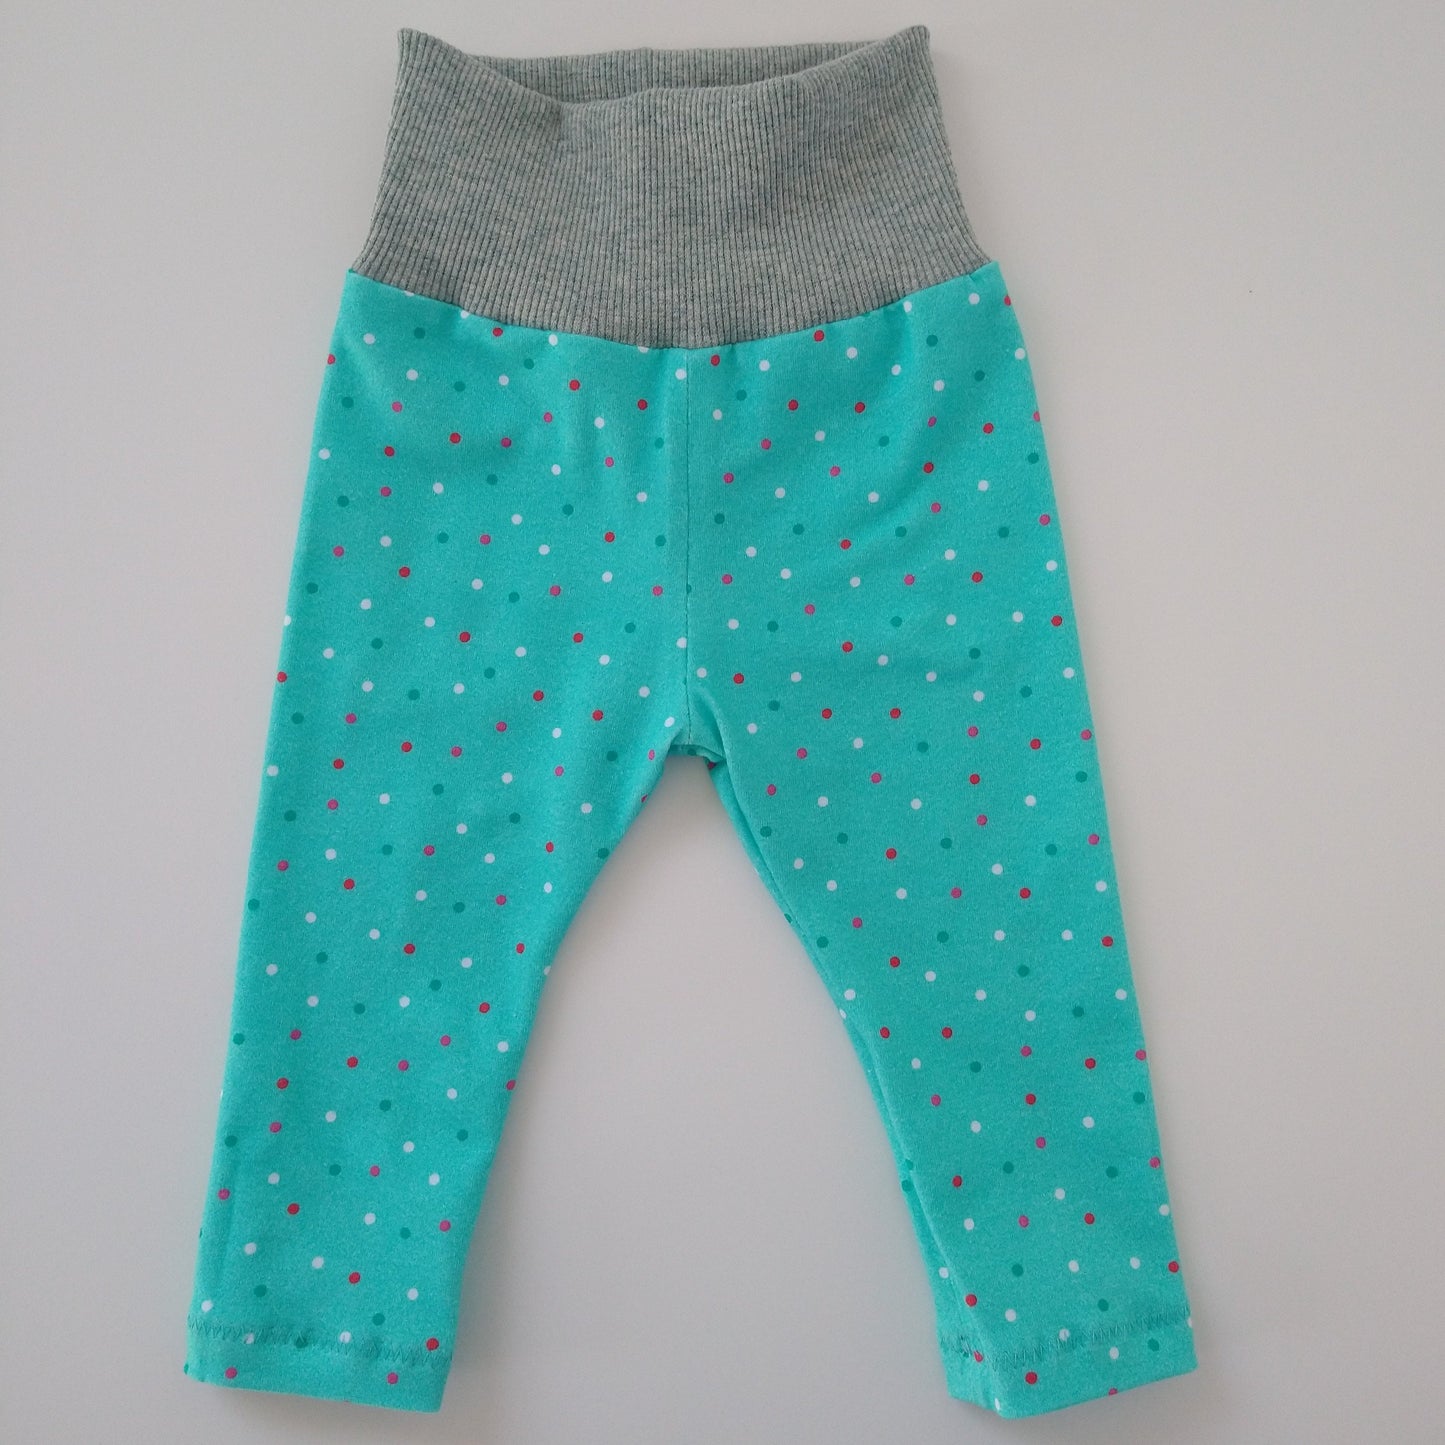 Baby leggings EUR size 68 / US 4-6 months (Handmade in Canada)